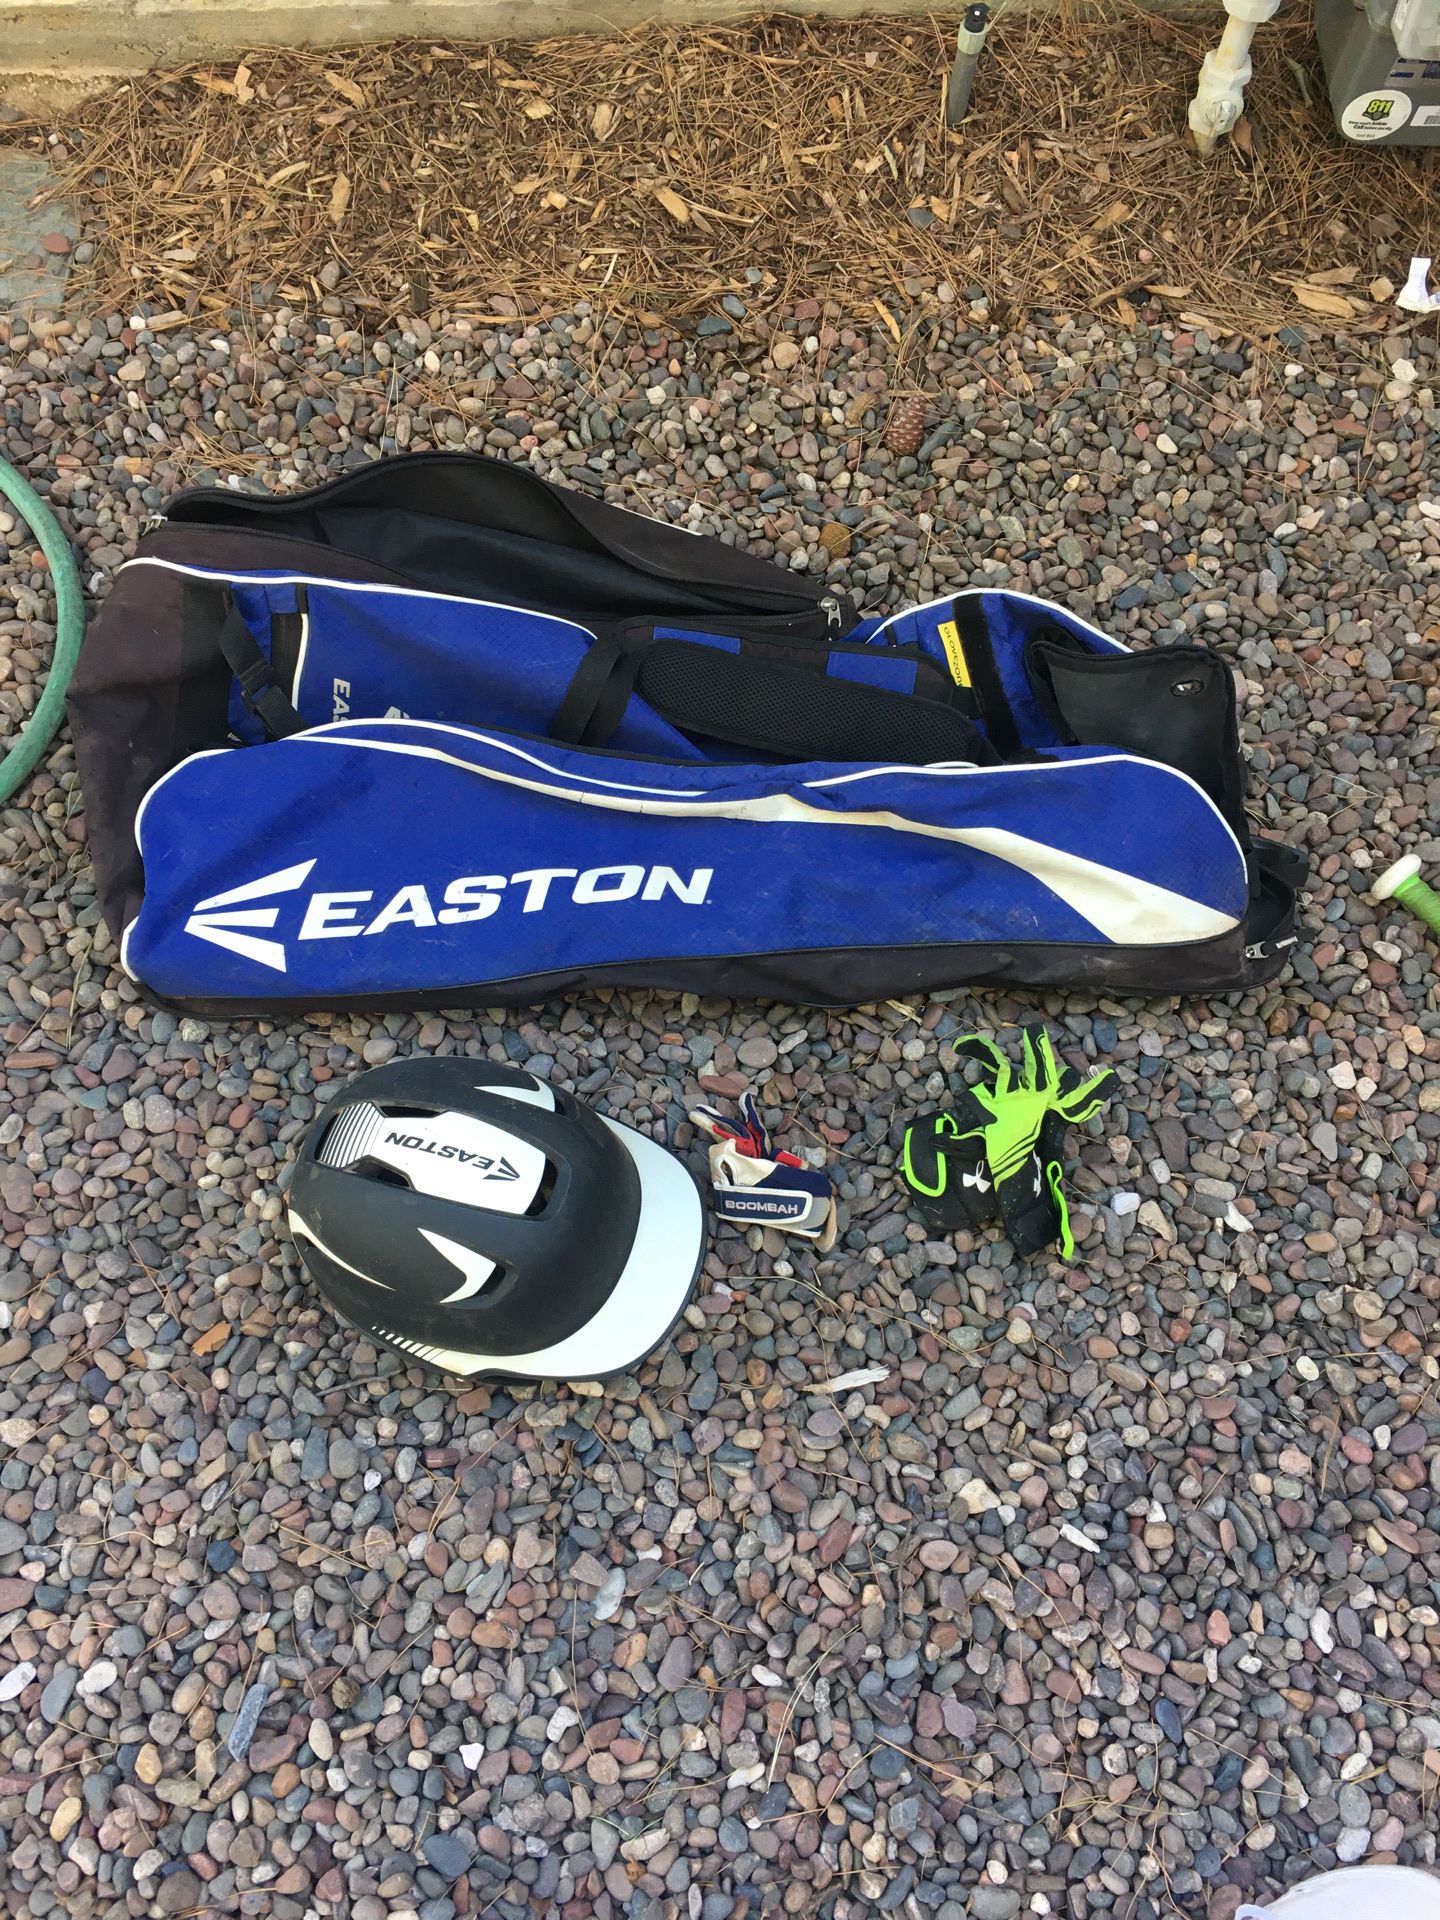 Base ball bag and gear